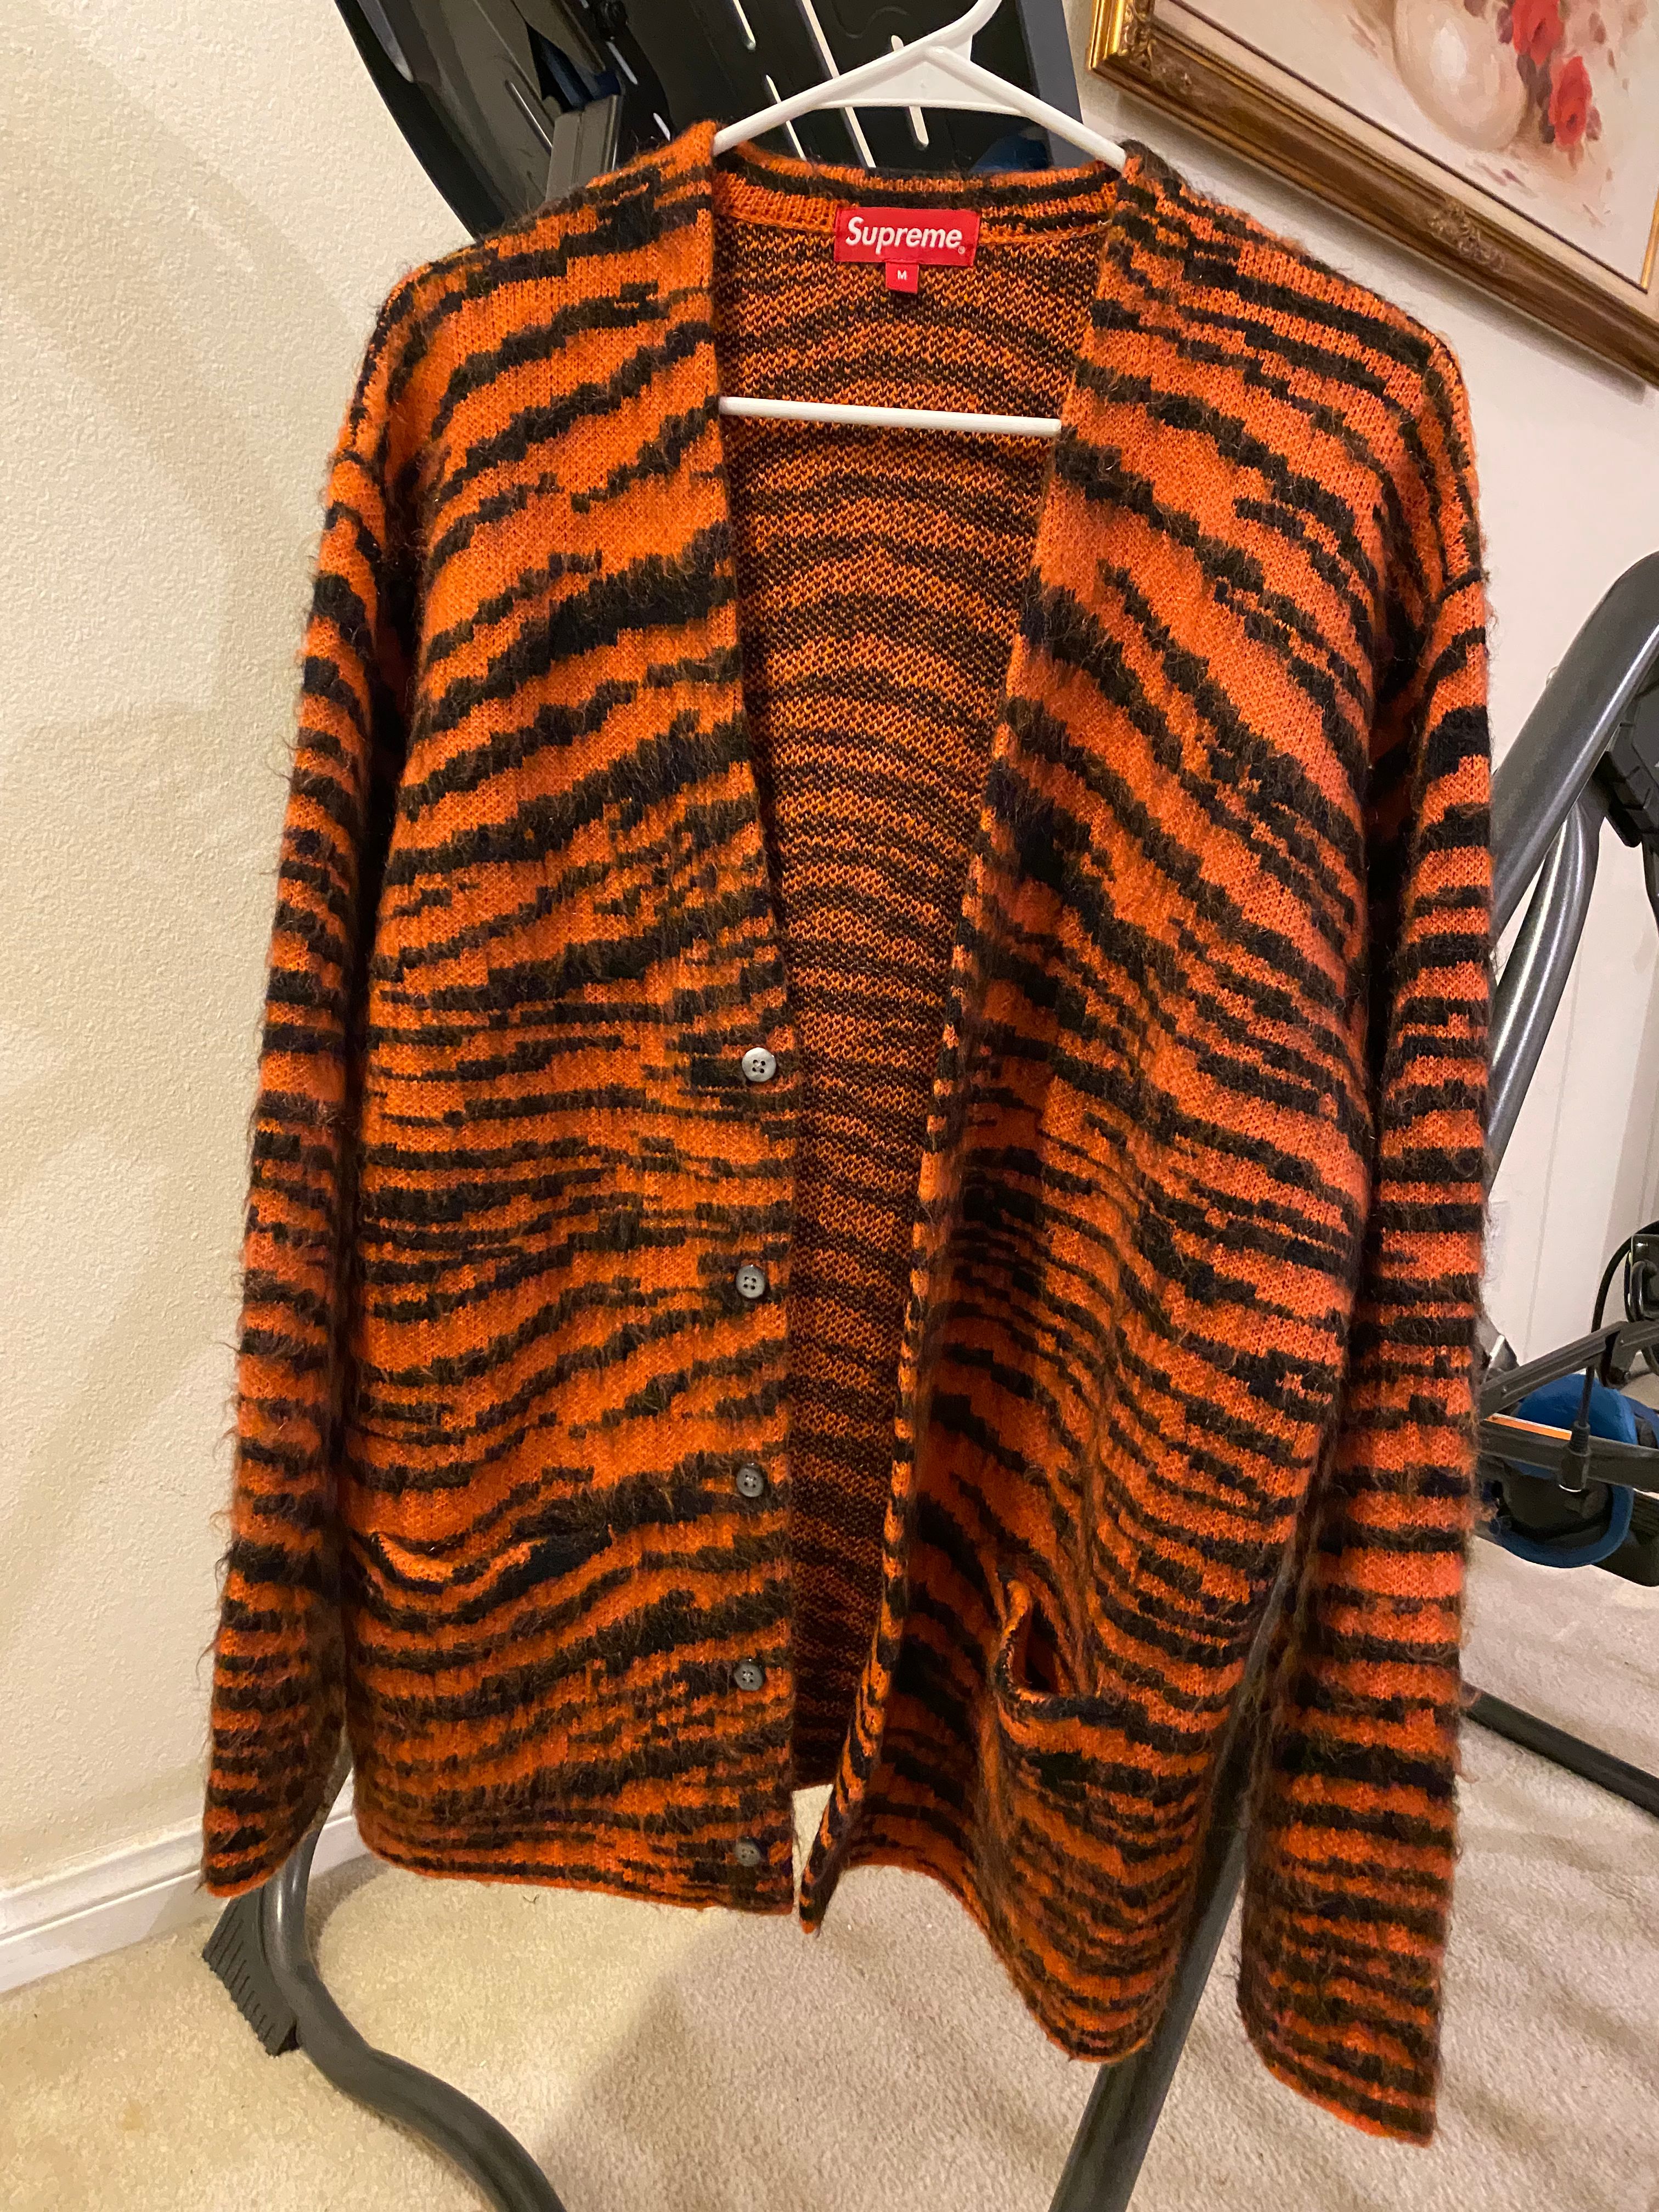 Supreme Supreme Brushed Mohair Cardigan Tiger Stripe | Grailed